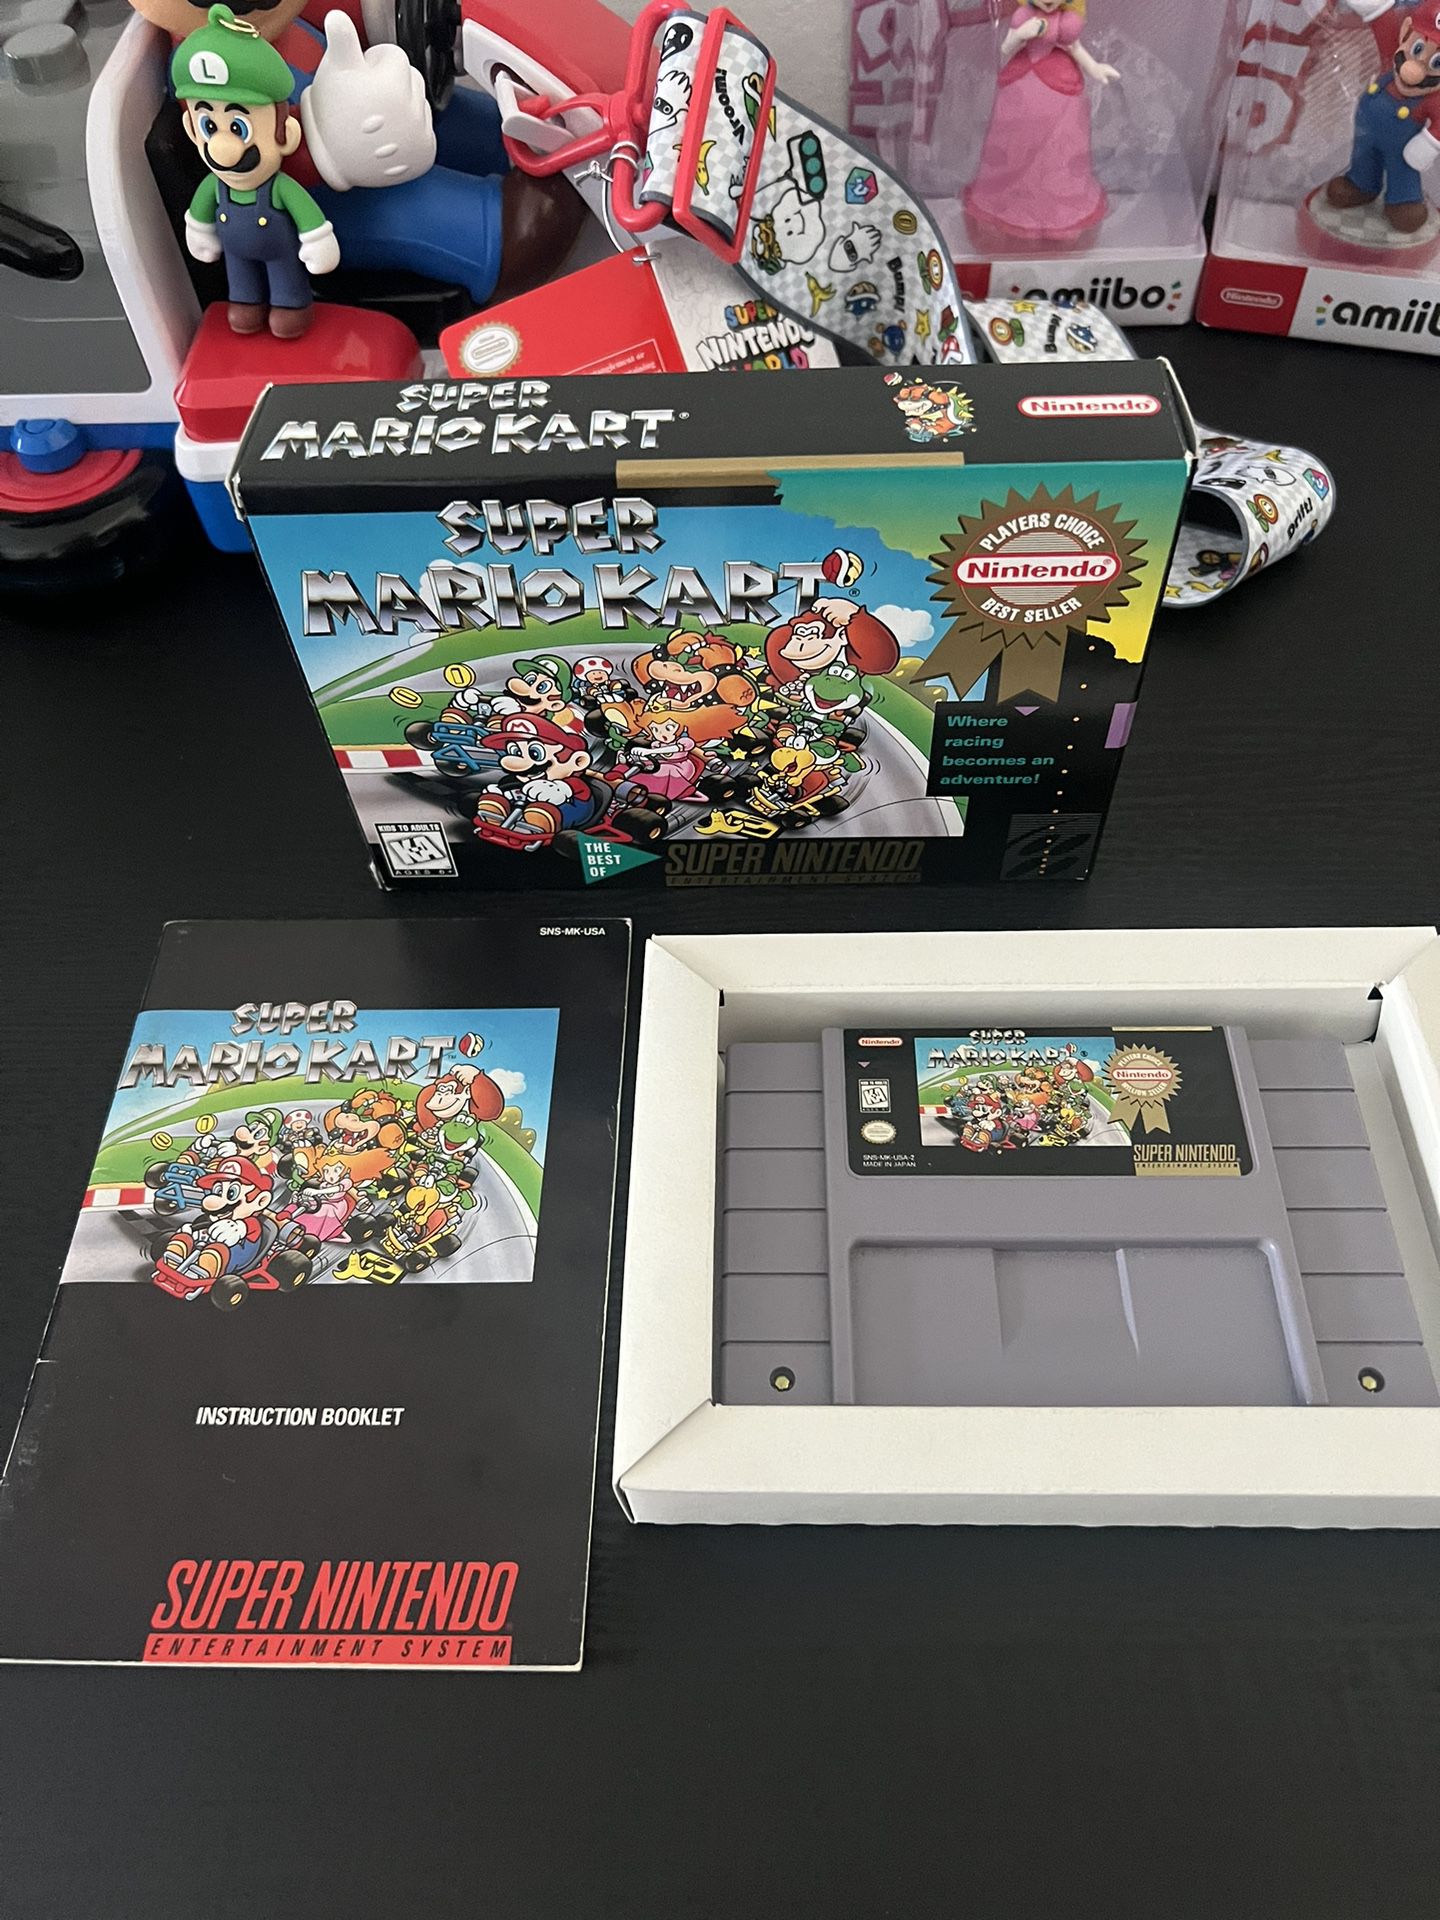 Super Mario kart SNES 